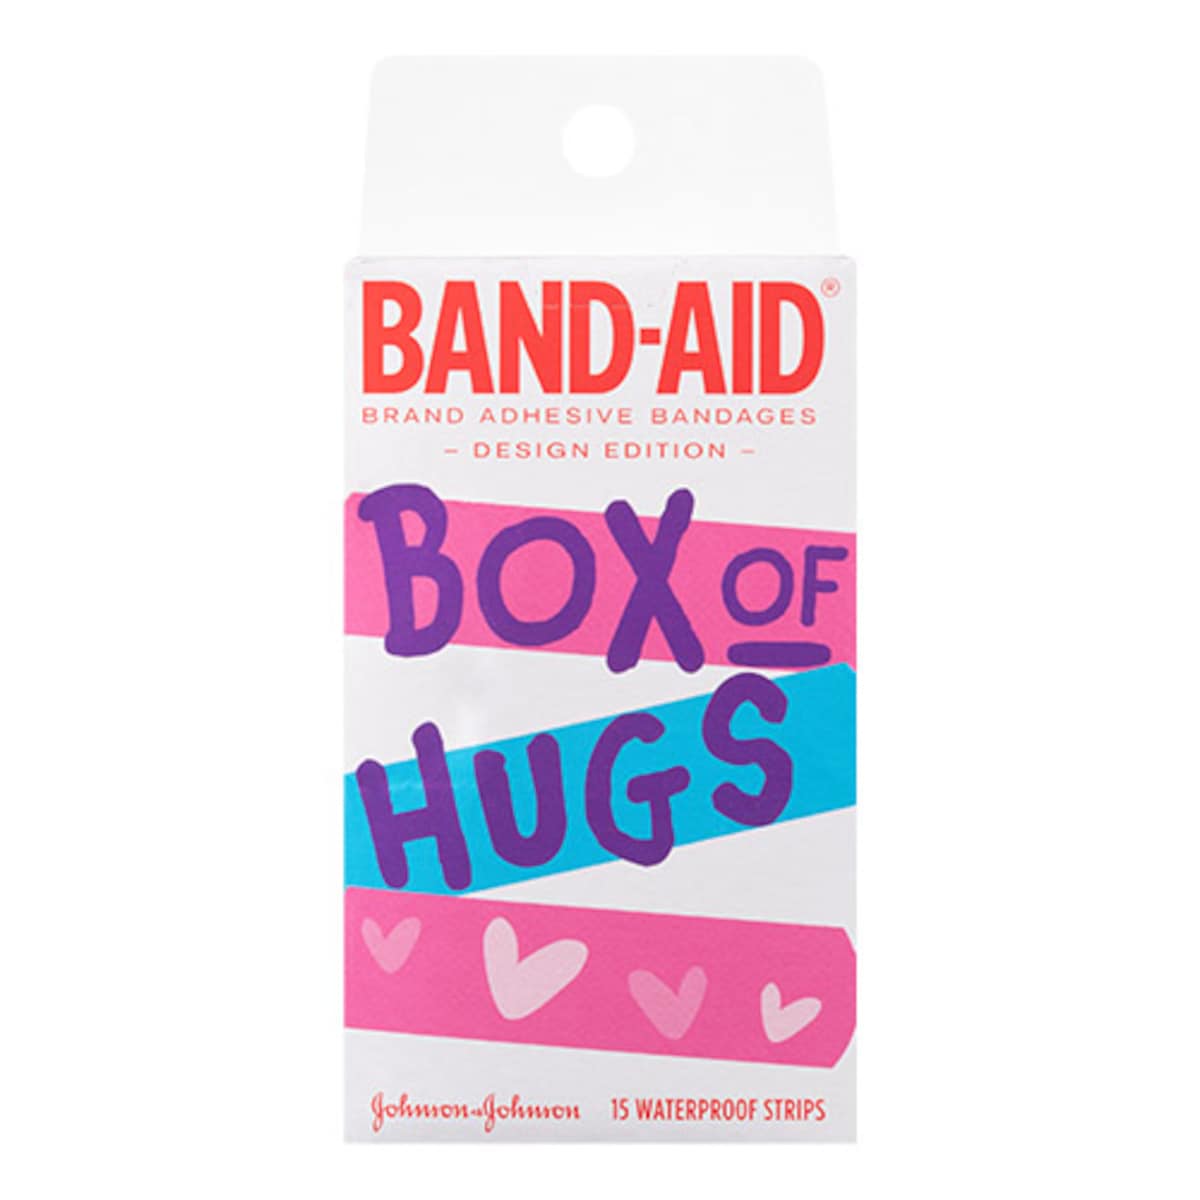 Band-Aid Box Of Hugs 15 Waterproof Strips